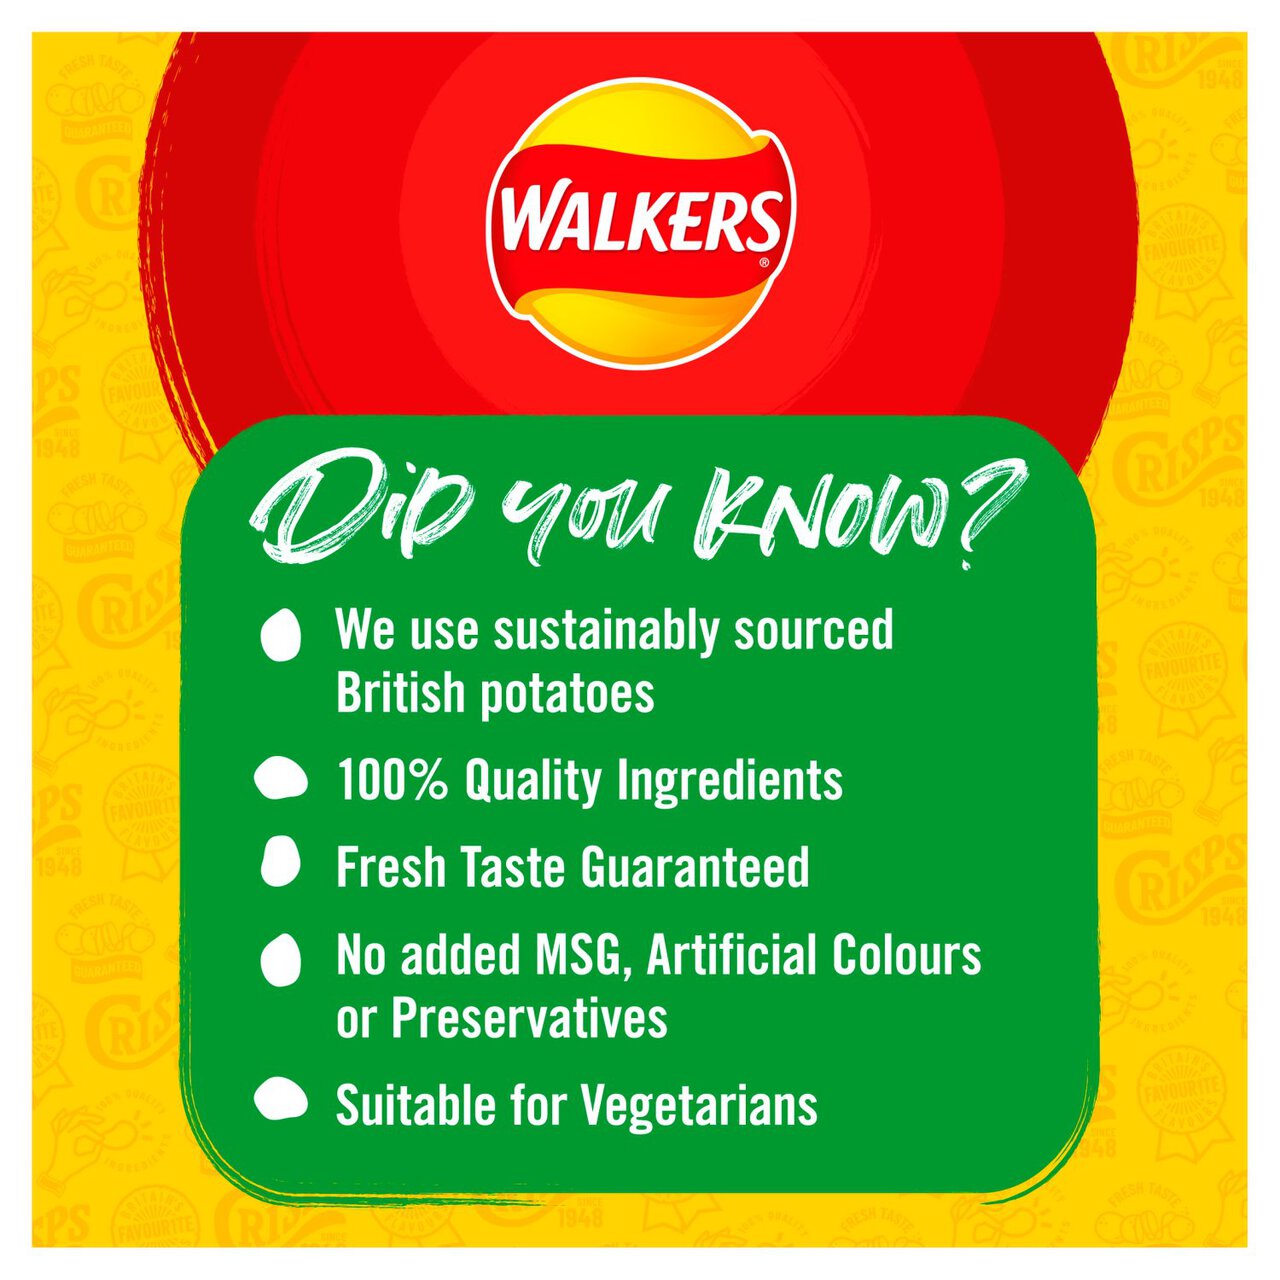 Walkers Salt & Vinegar Multipack Crisps 6 per pack